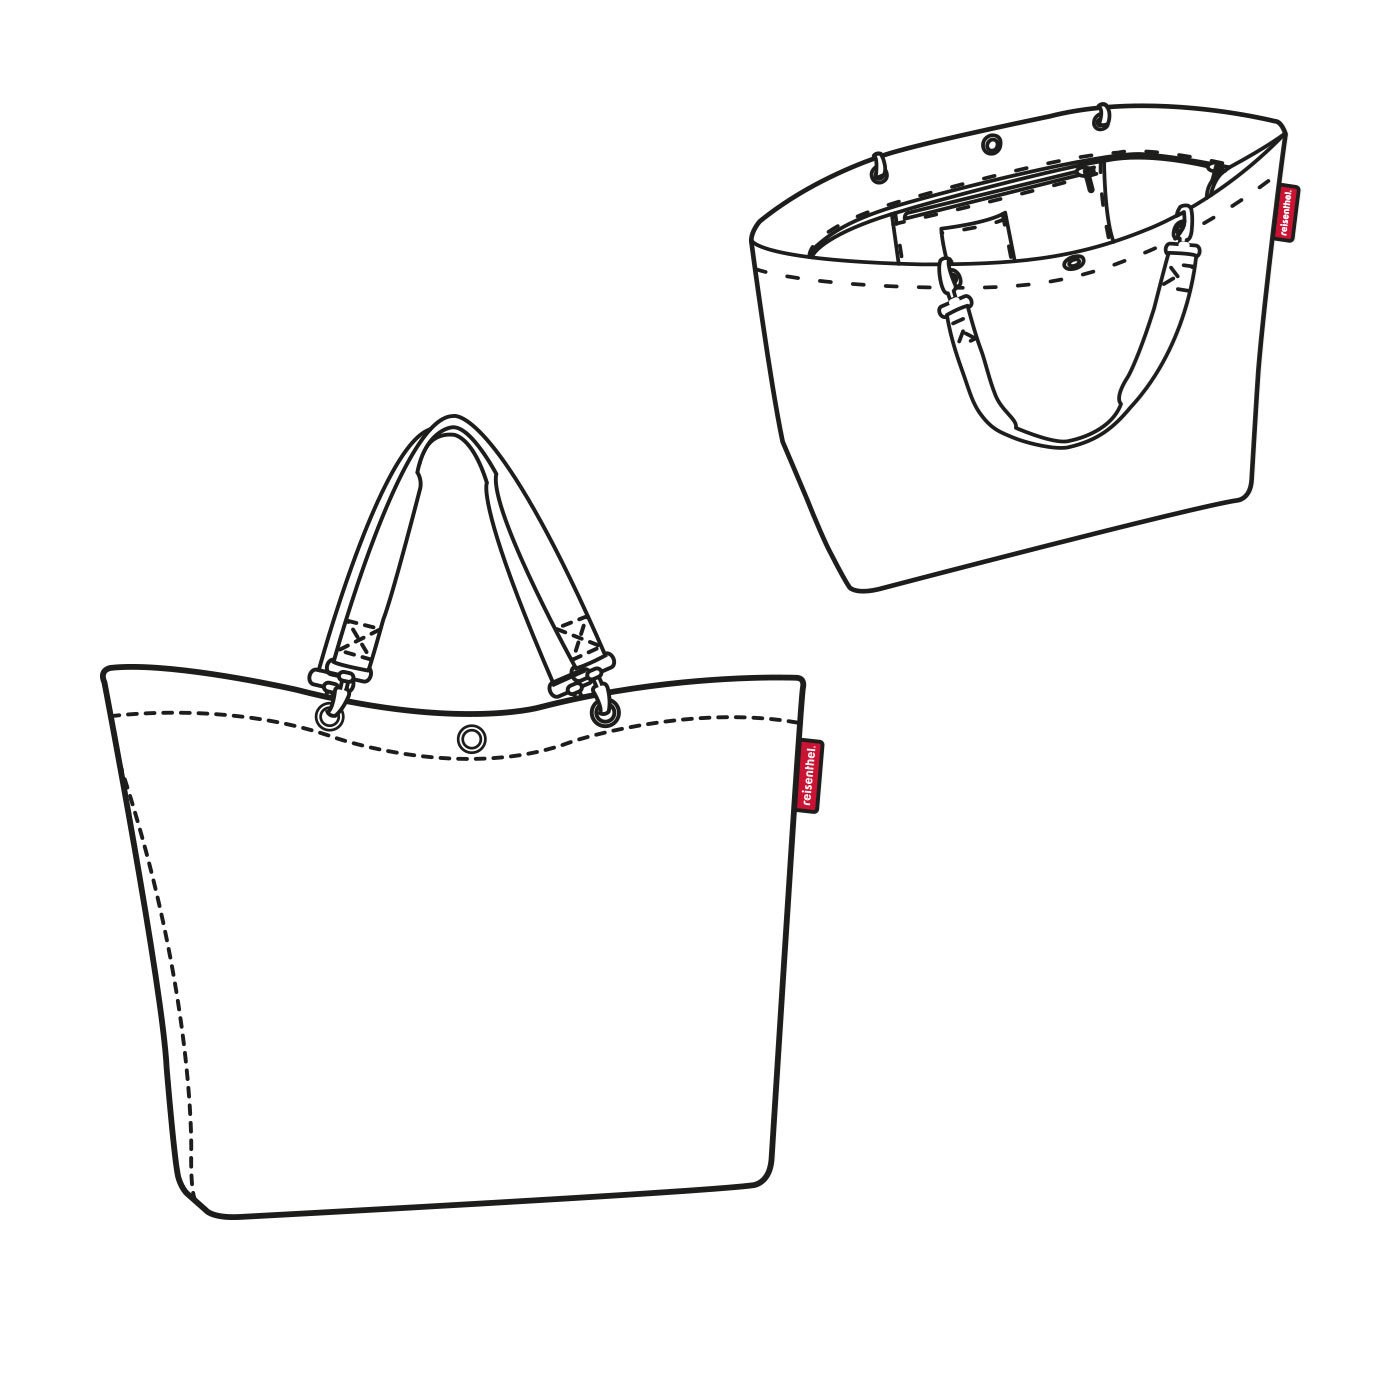 Taška přes rameno Shopper XL op-art_5